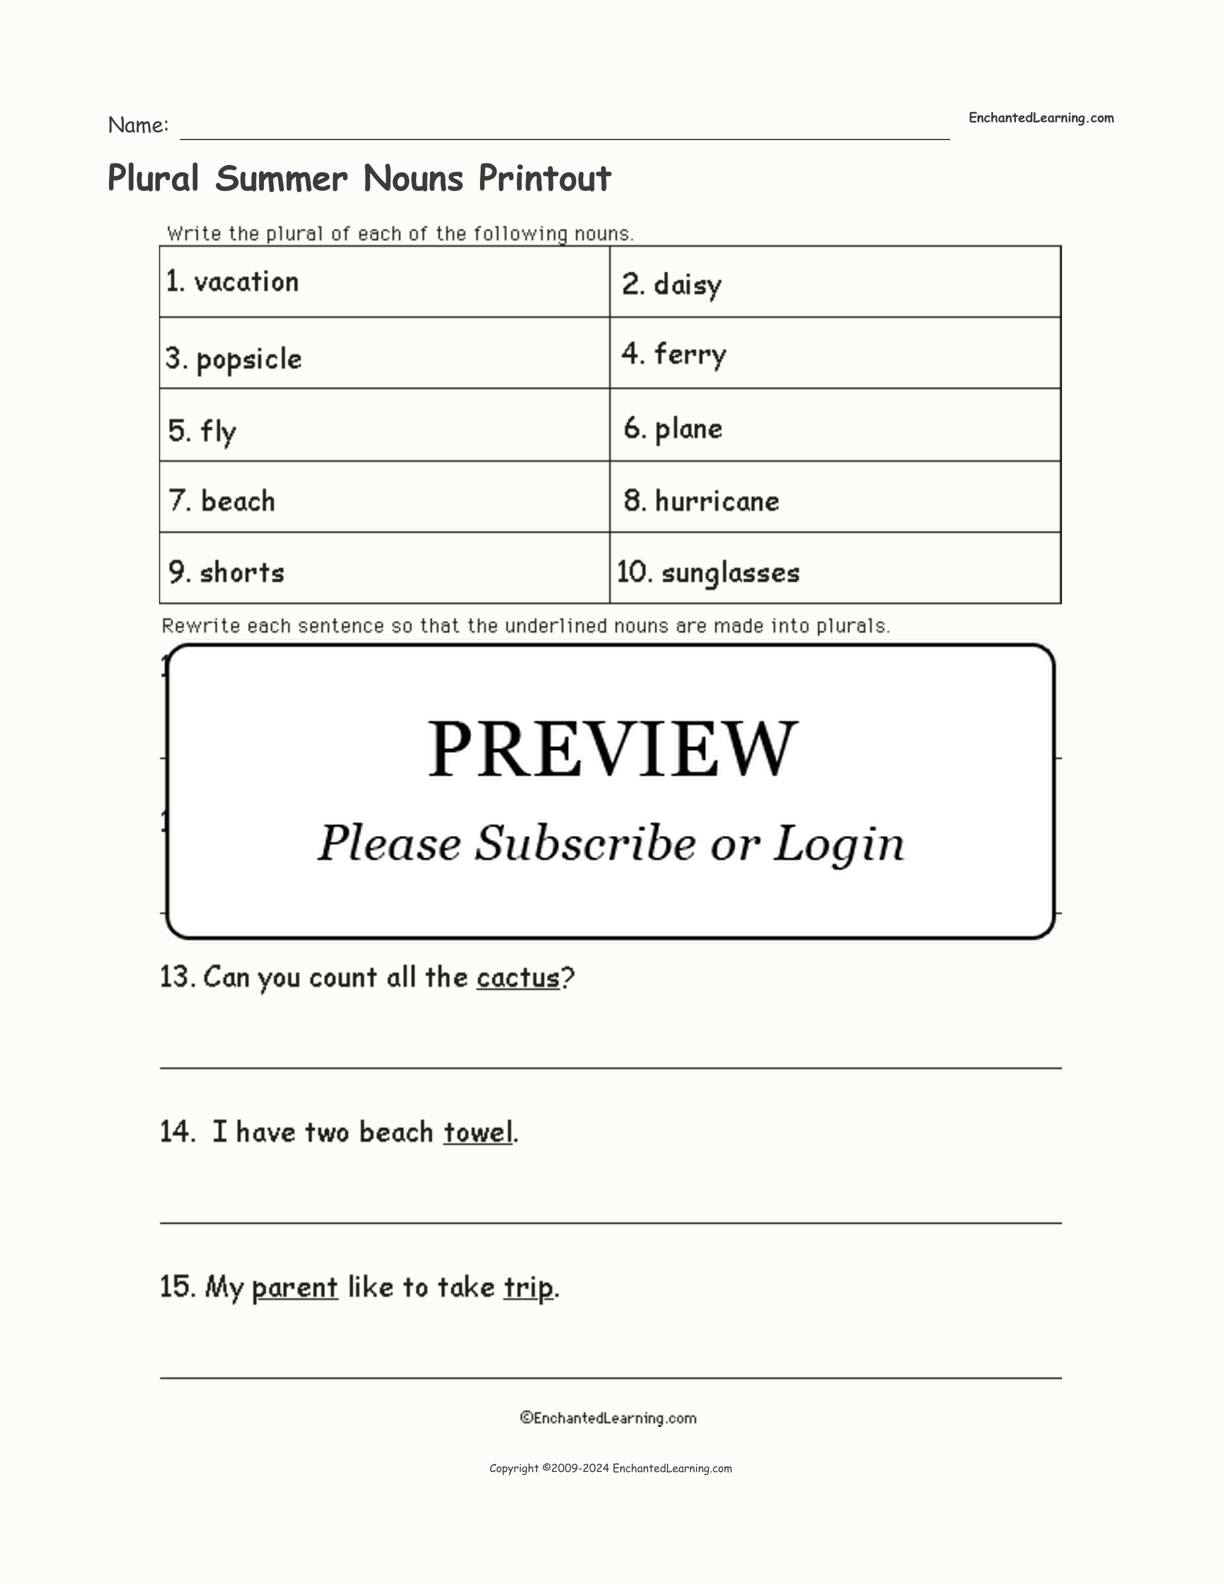 Plural Summer Nouns Printout interactive worksheet page 1